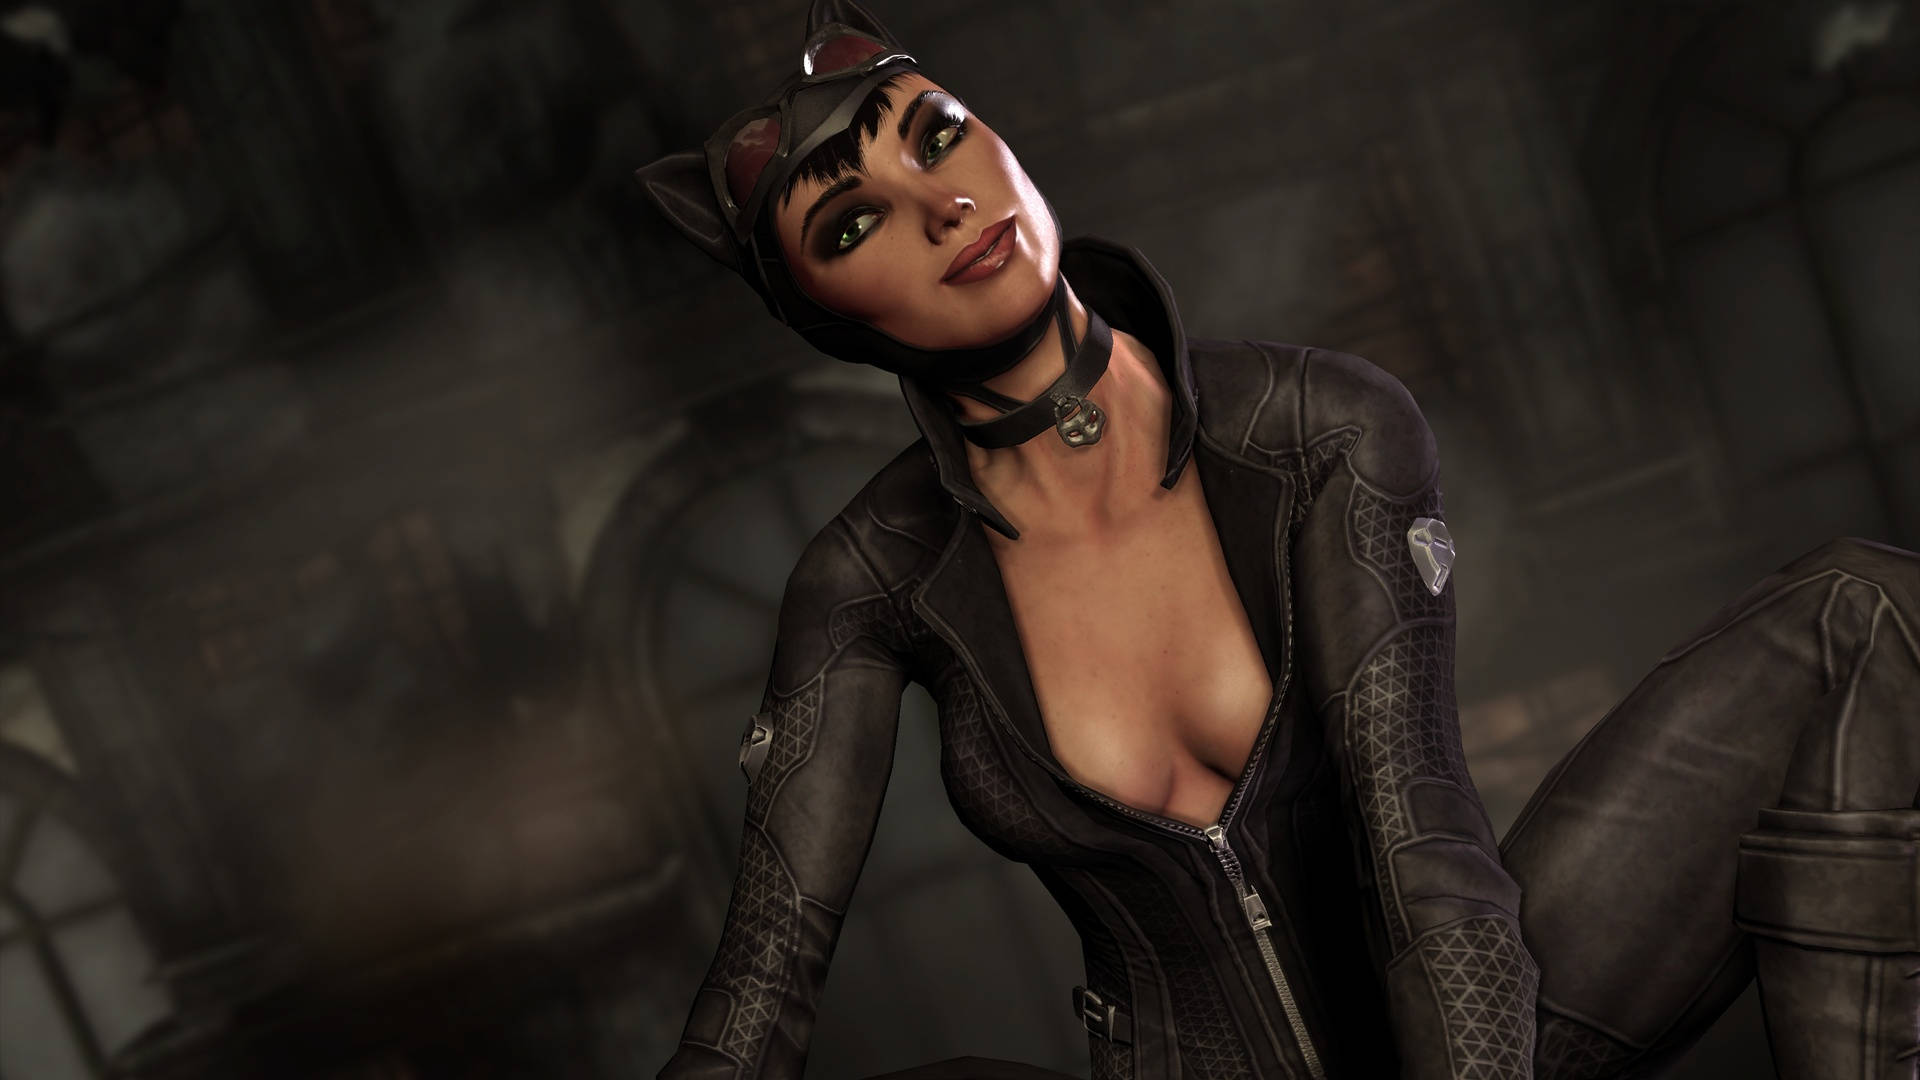 Catwoman Batman Arkham City